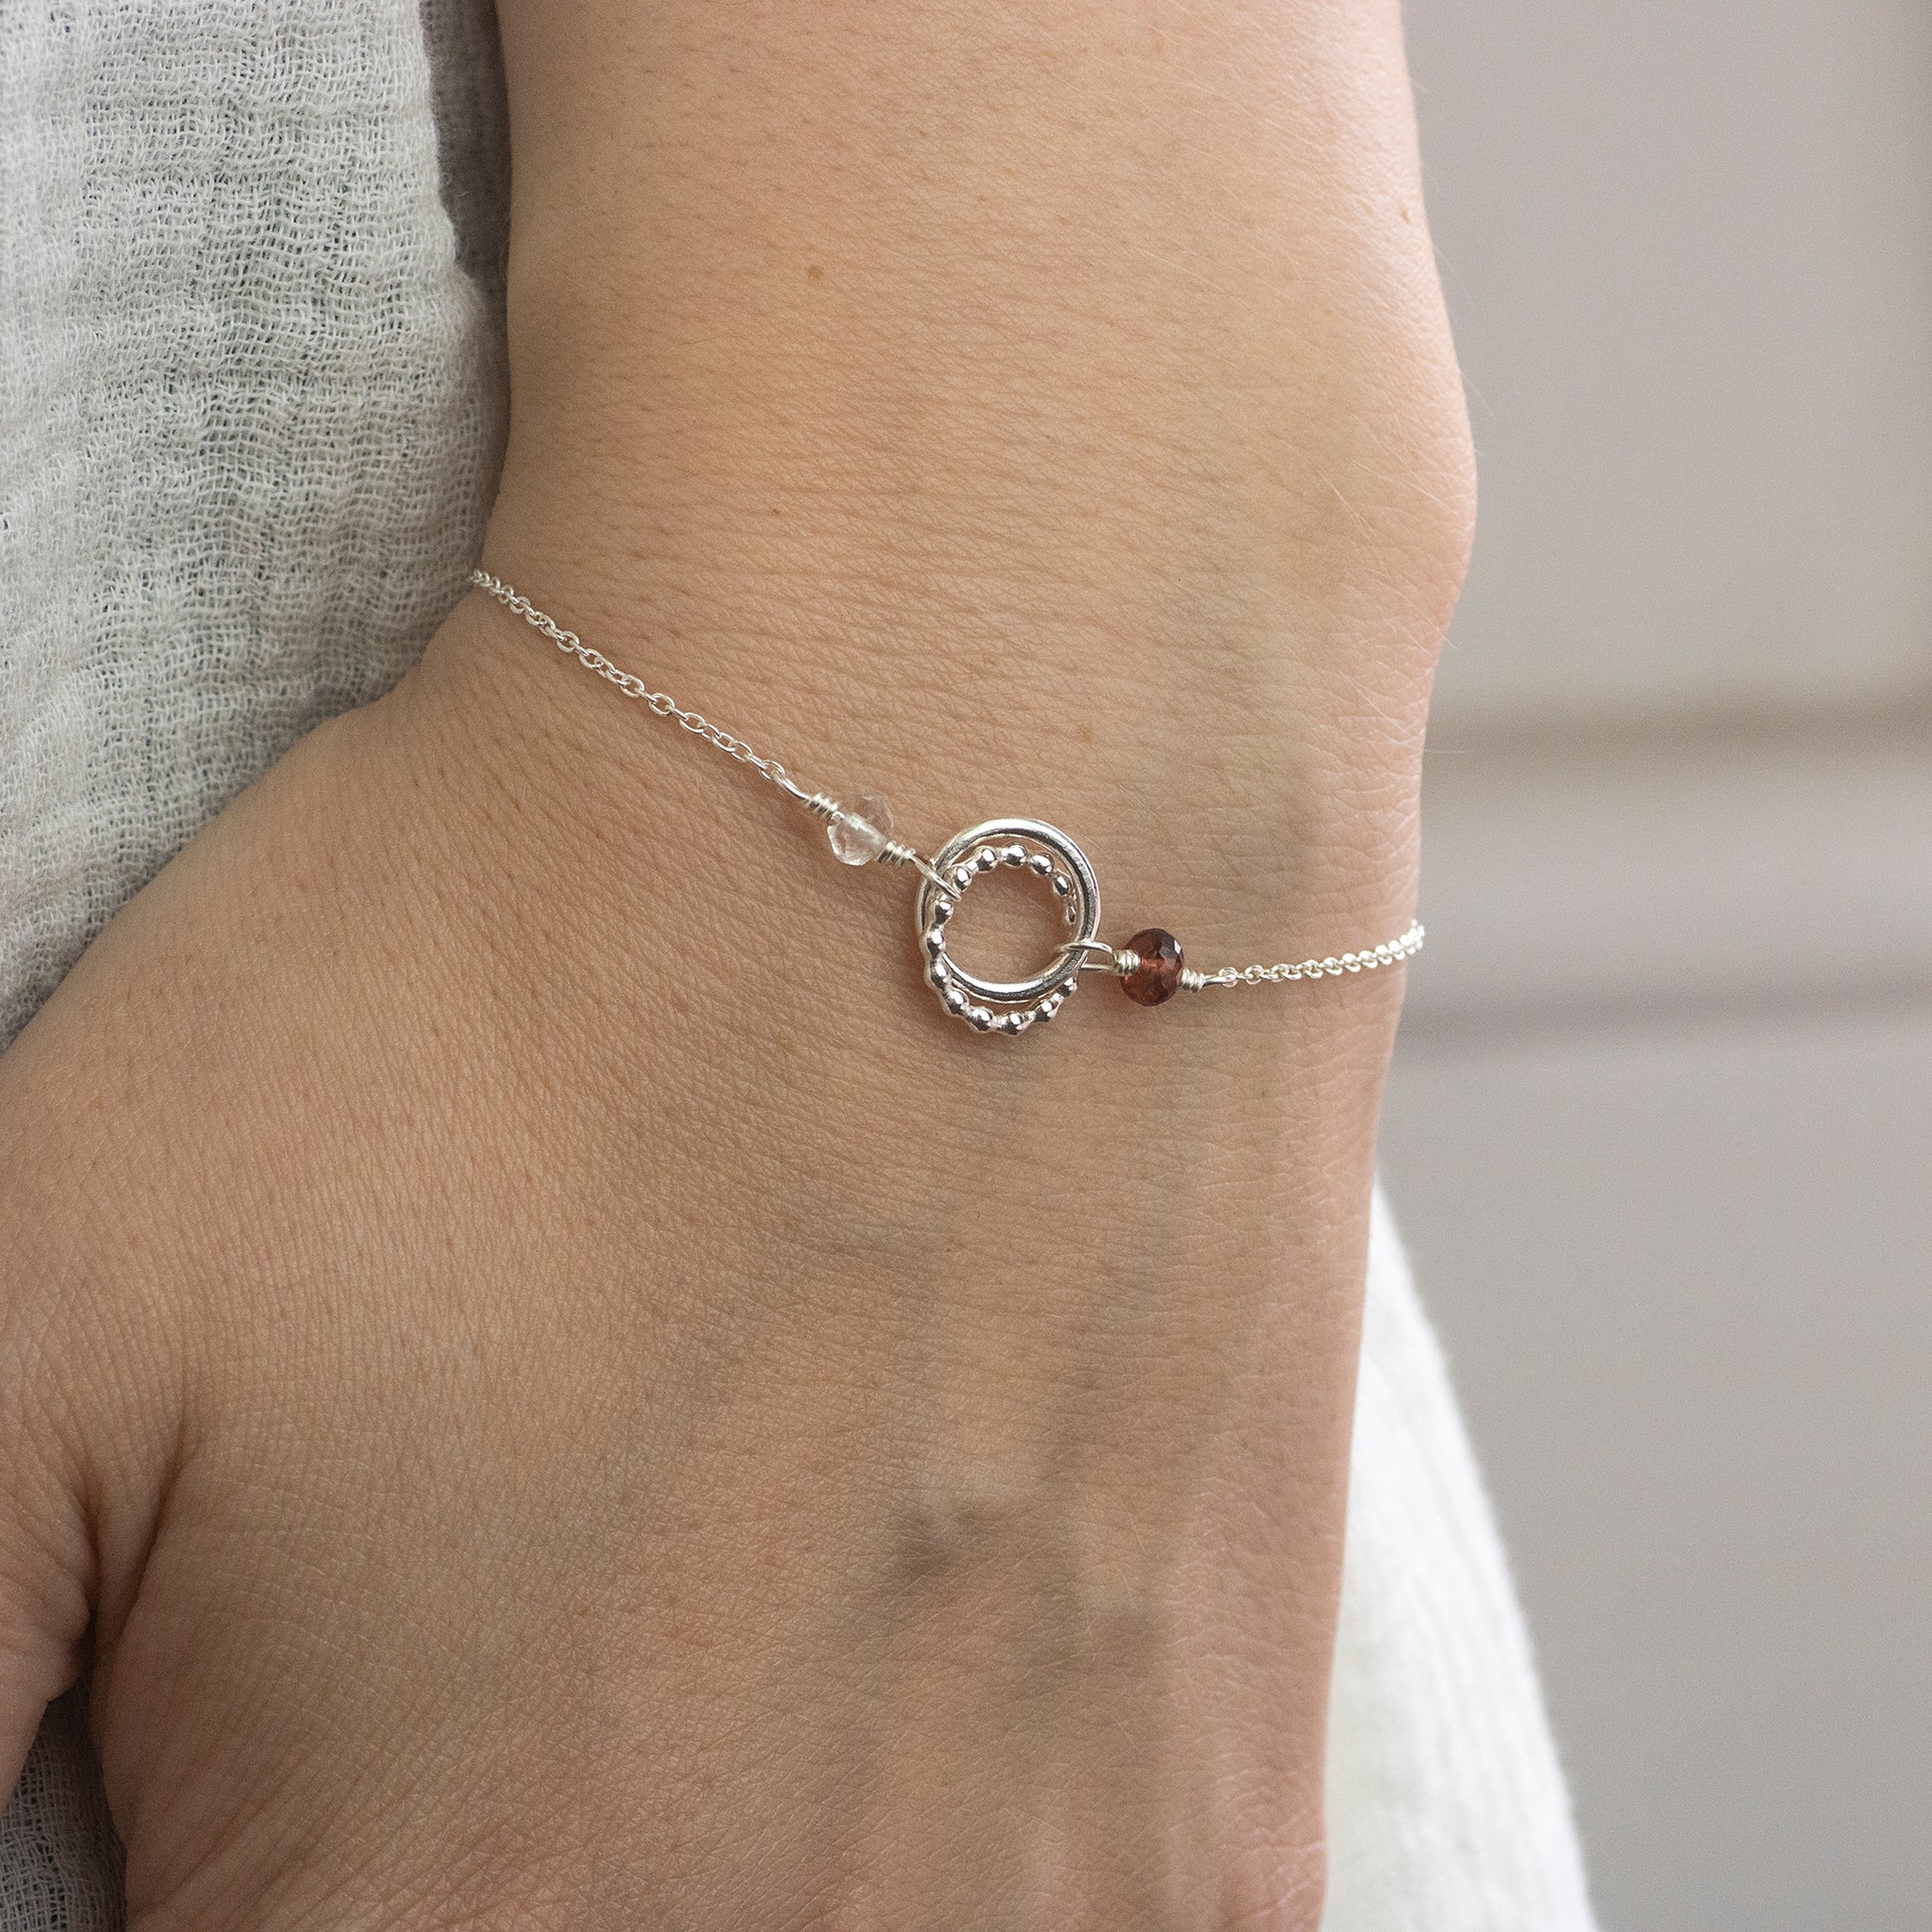 Friendship Bracelet - Double Birthstone Love Knot Bracelet